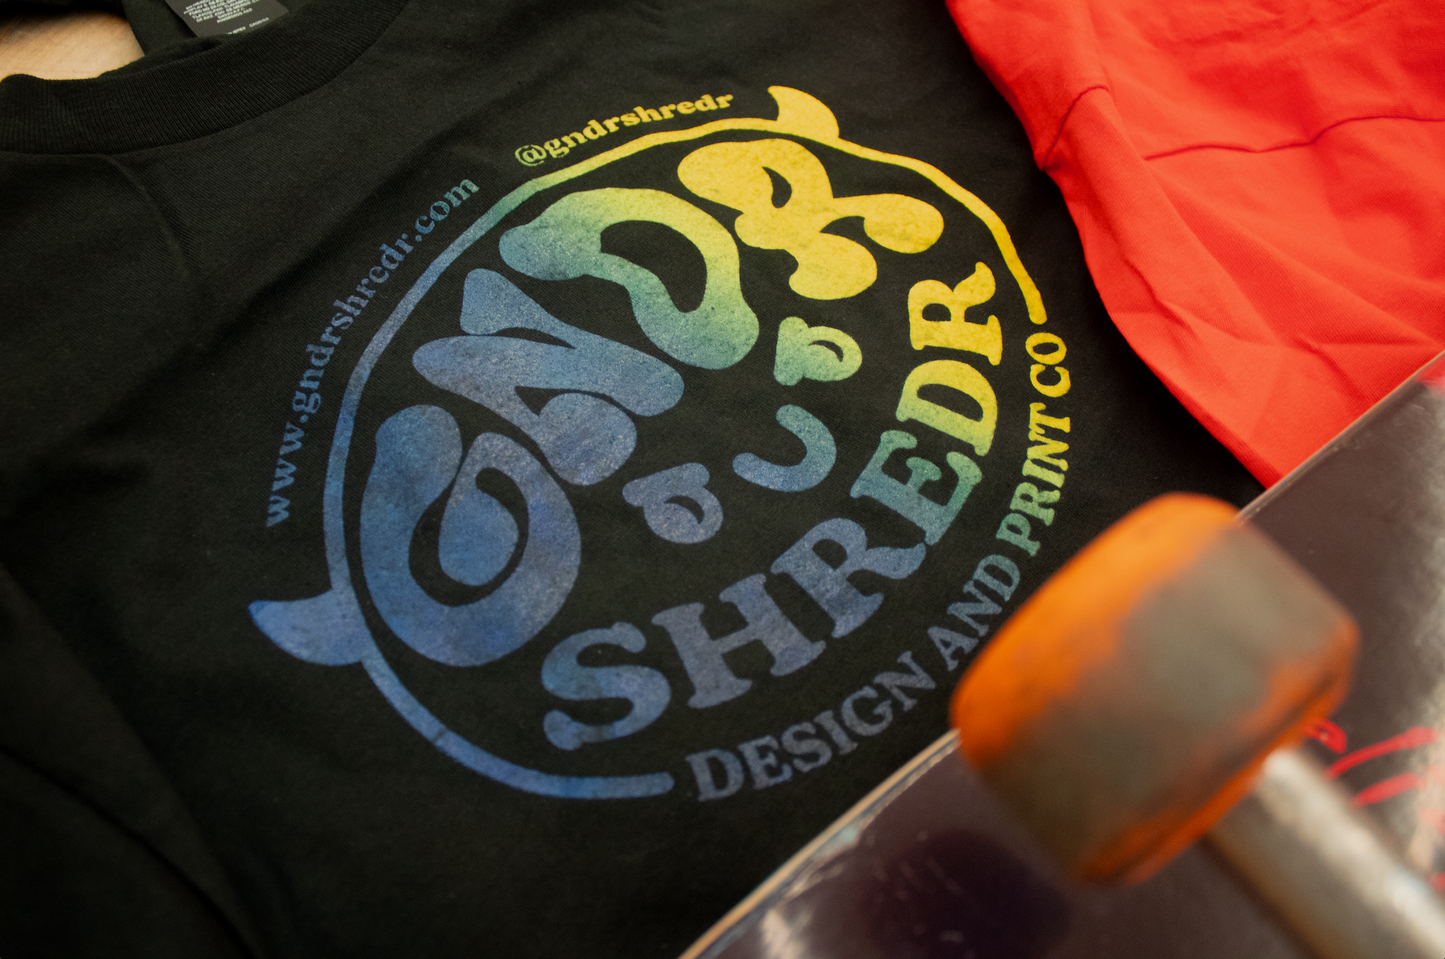 GNDR SHREDR Logo T-Shirt